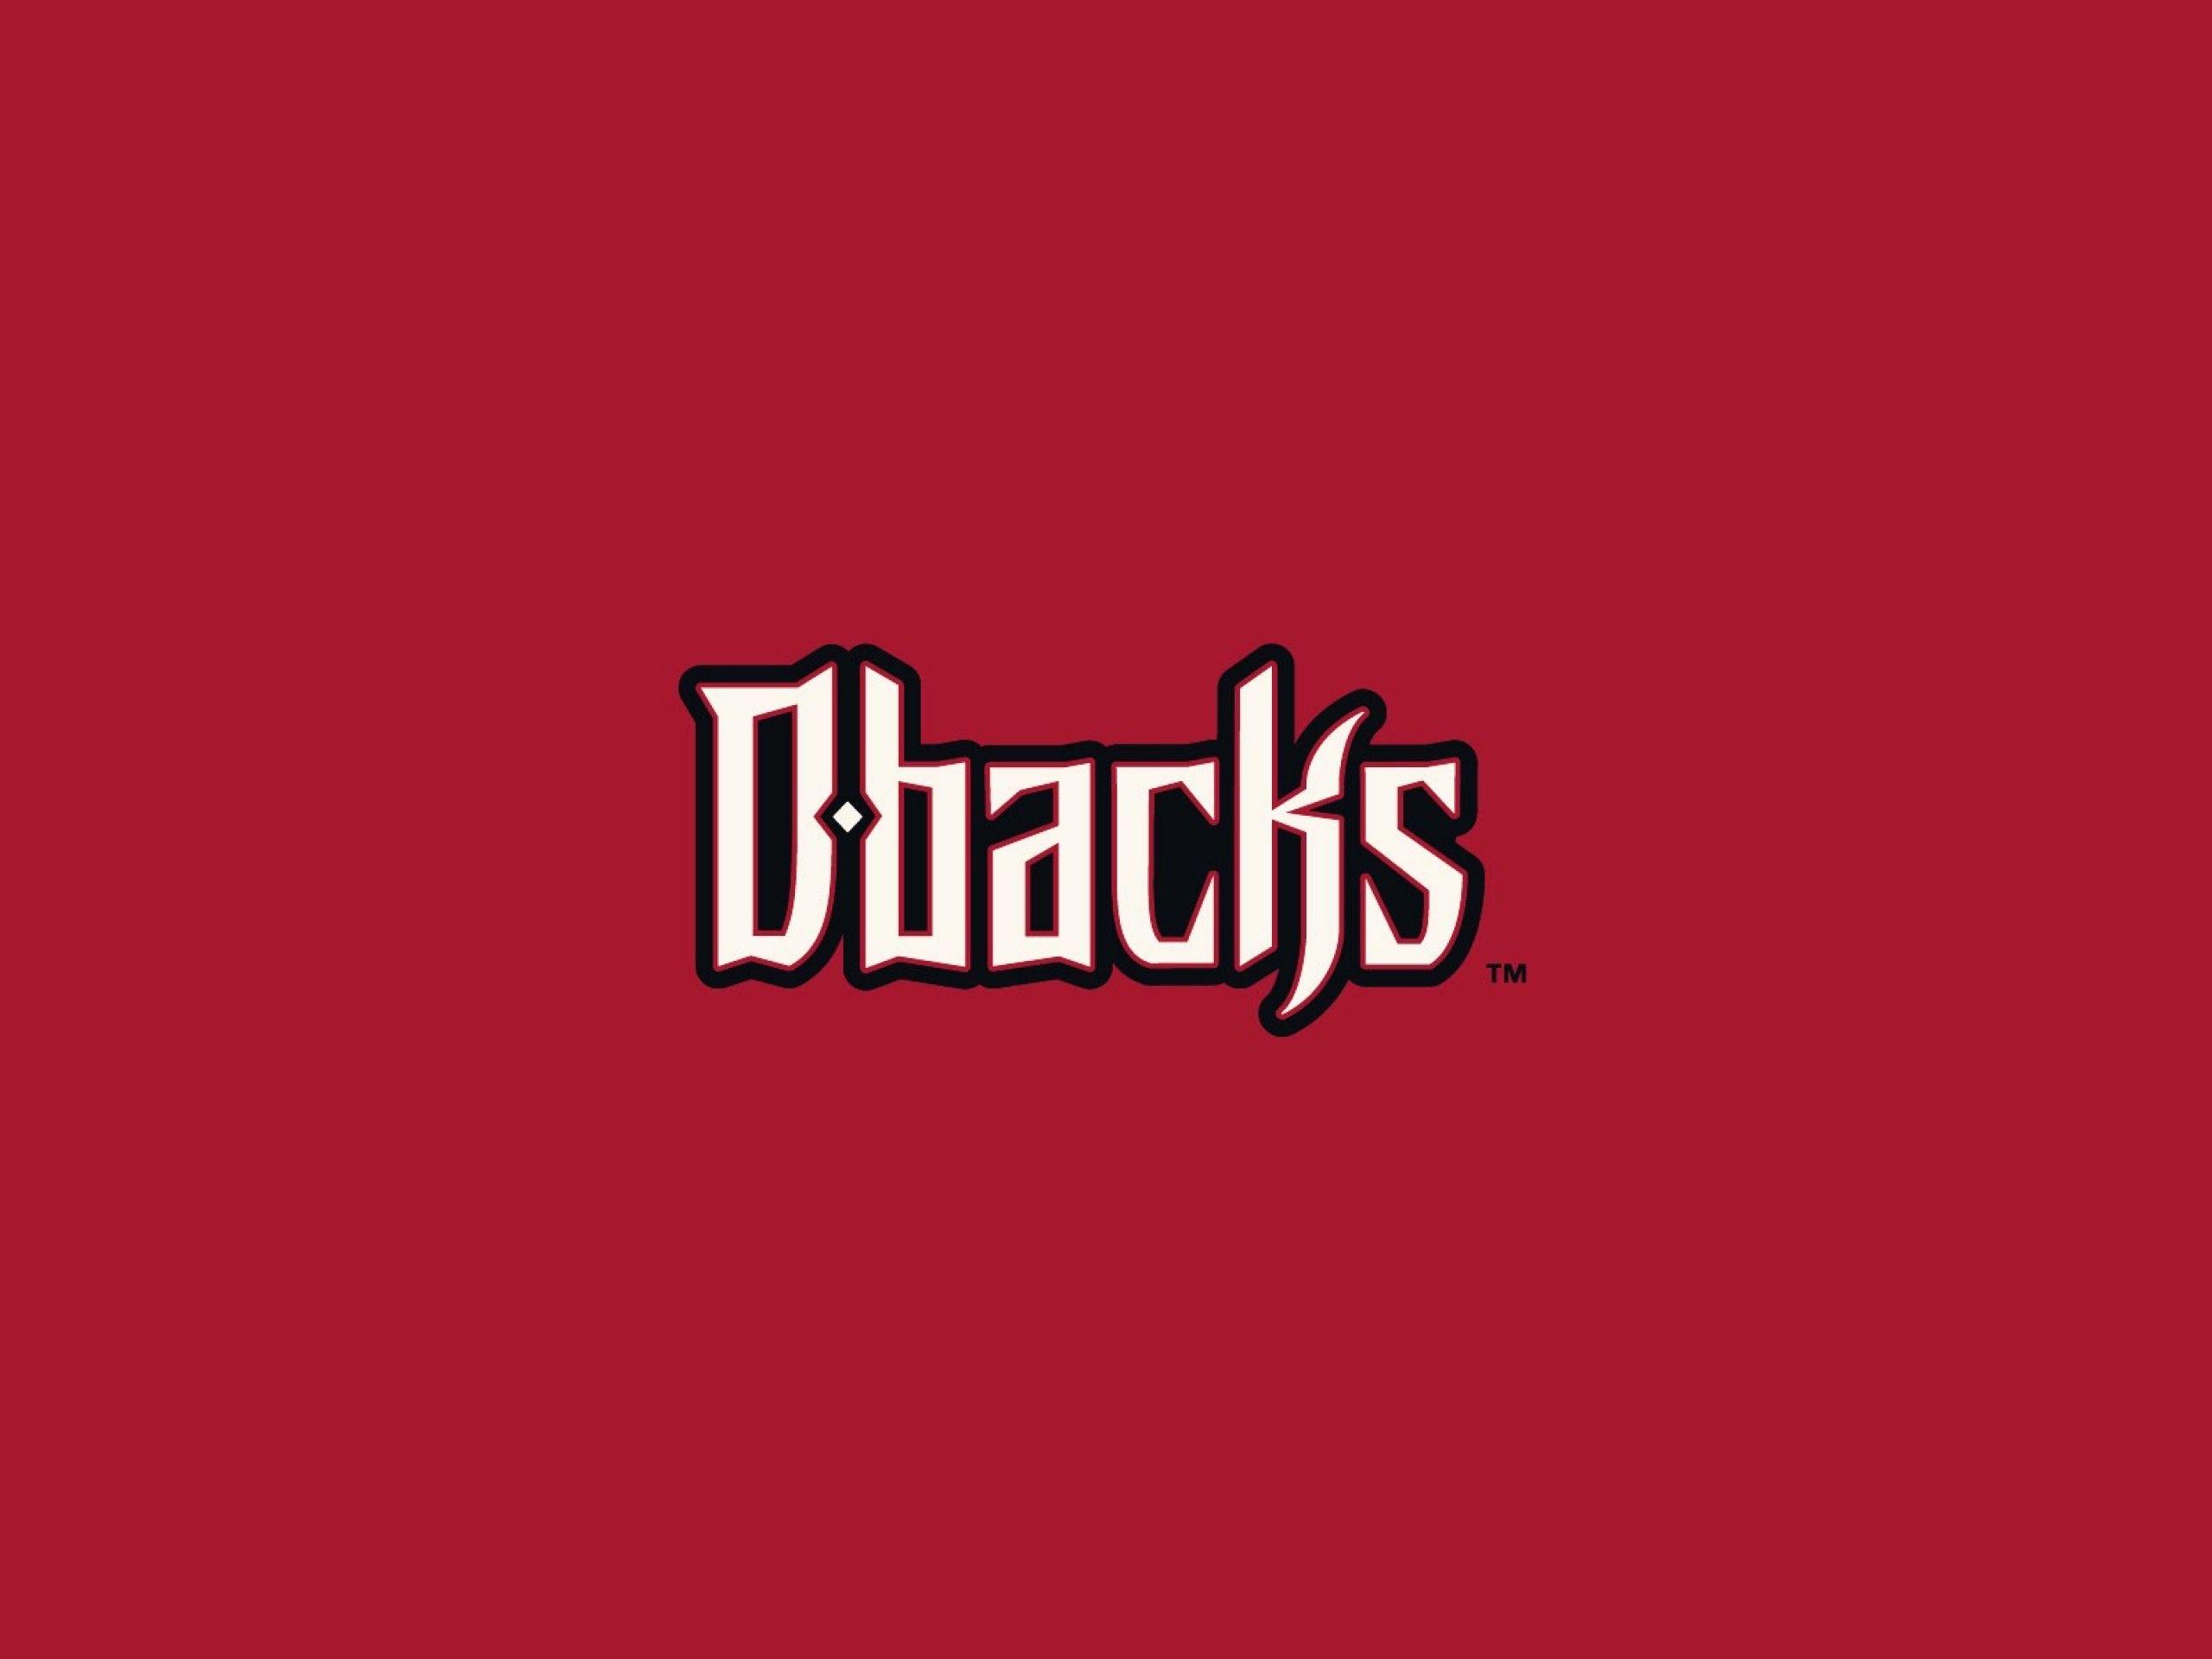 D-backs Logo - Arizona Diamondbacks Wallpapers - Wallpaper Cave